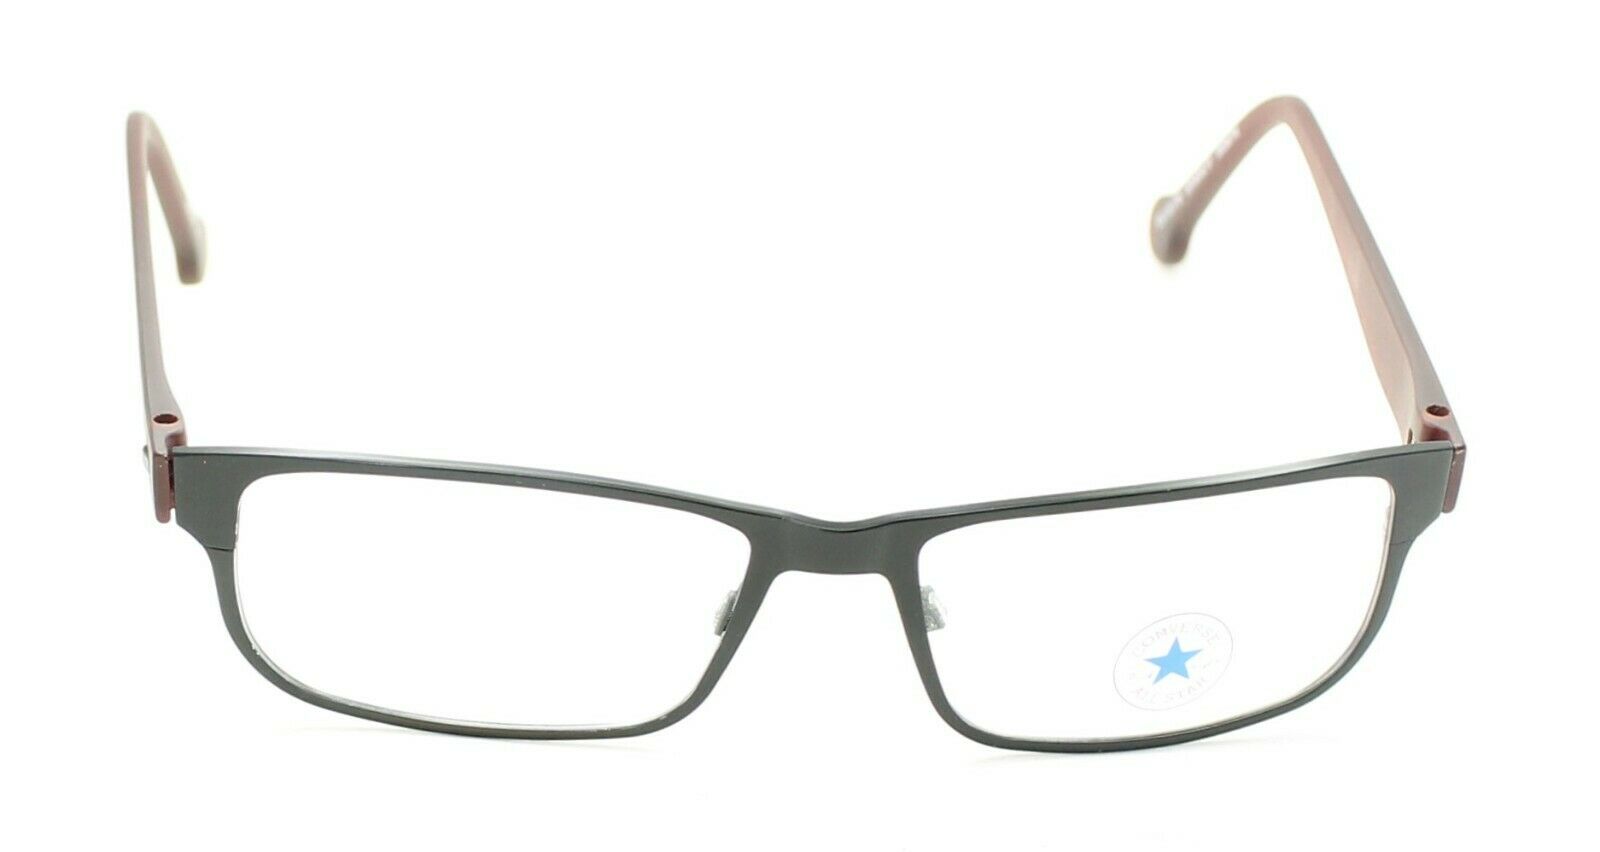 Converse All Star 07 30268791 FRAMES Glasses RX Optical Eyewear Eyeglasses - New